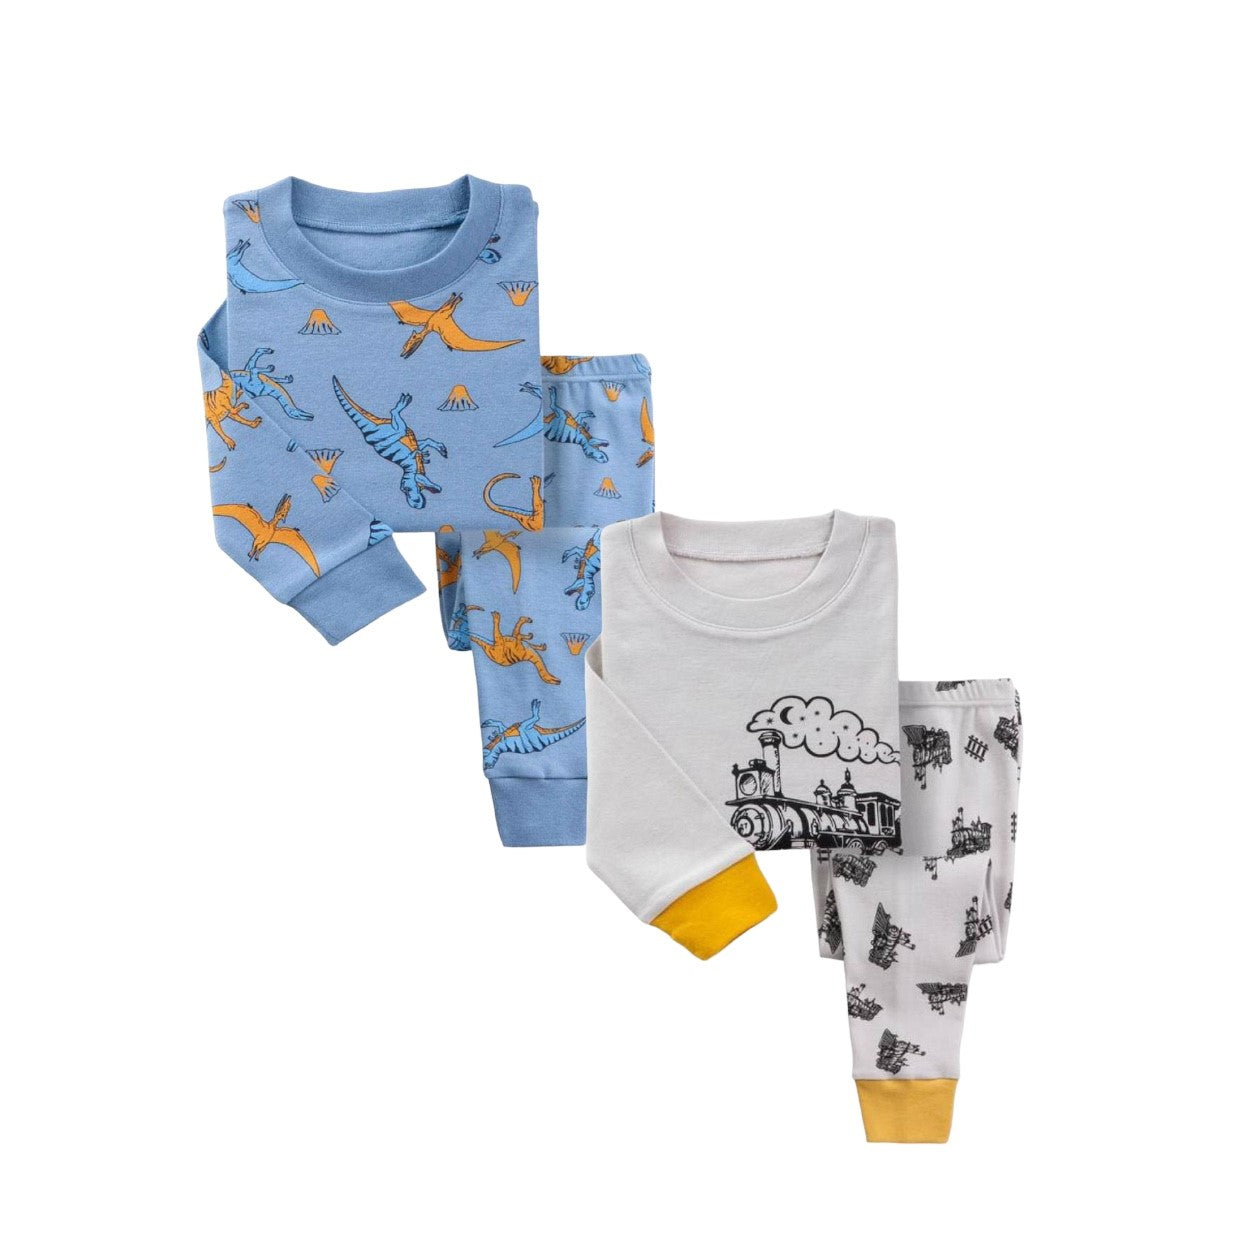 Kids 2 Pack Pajamas - Super Soft Cotton